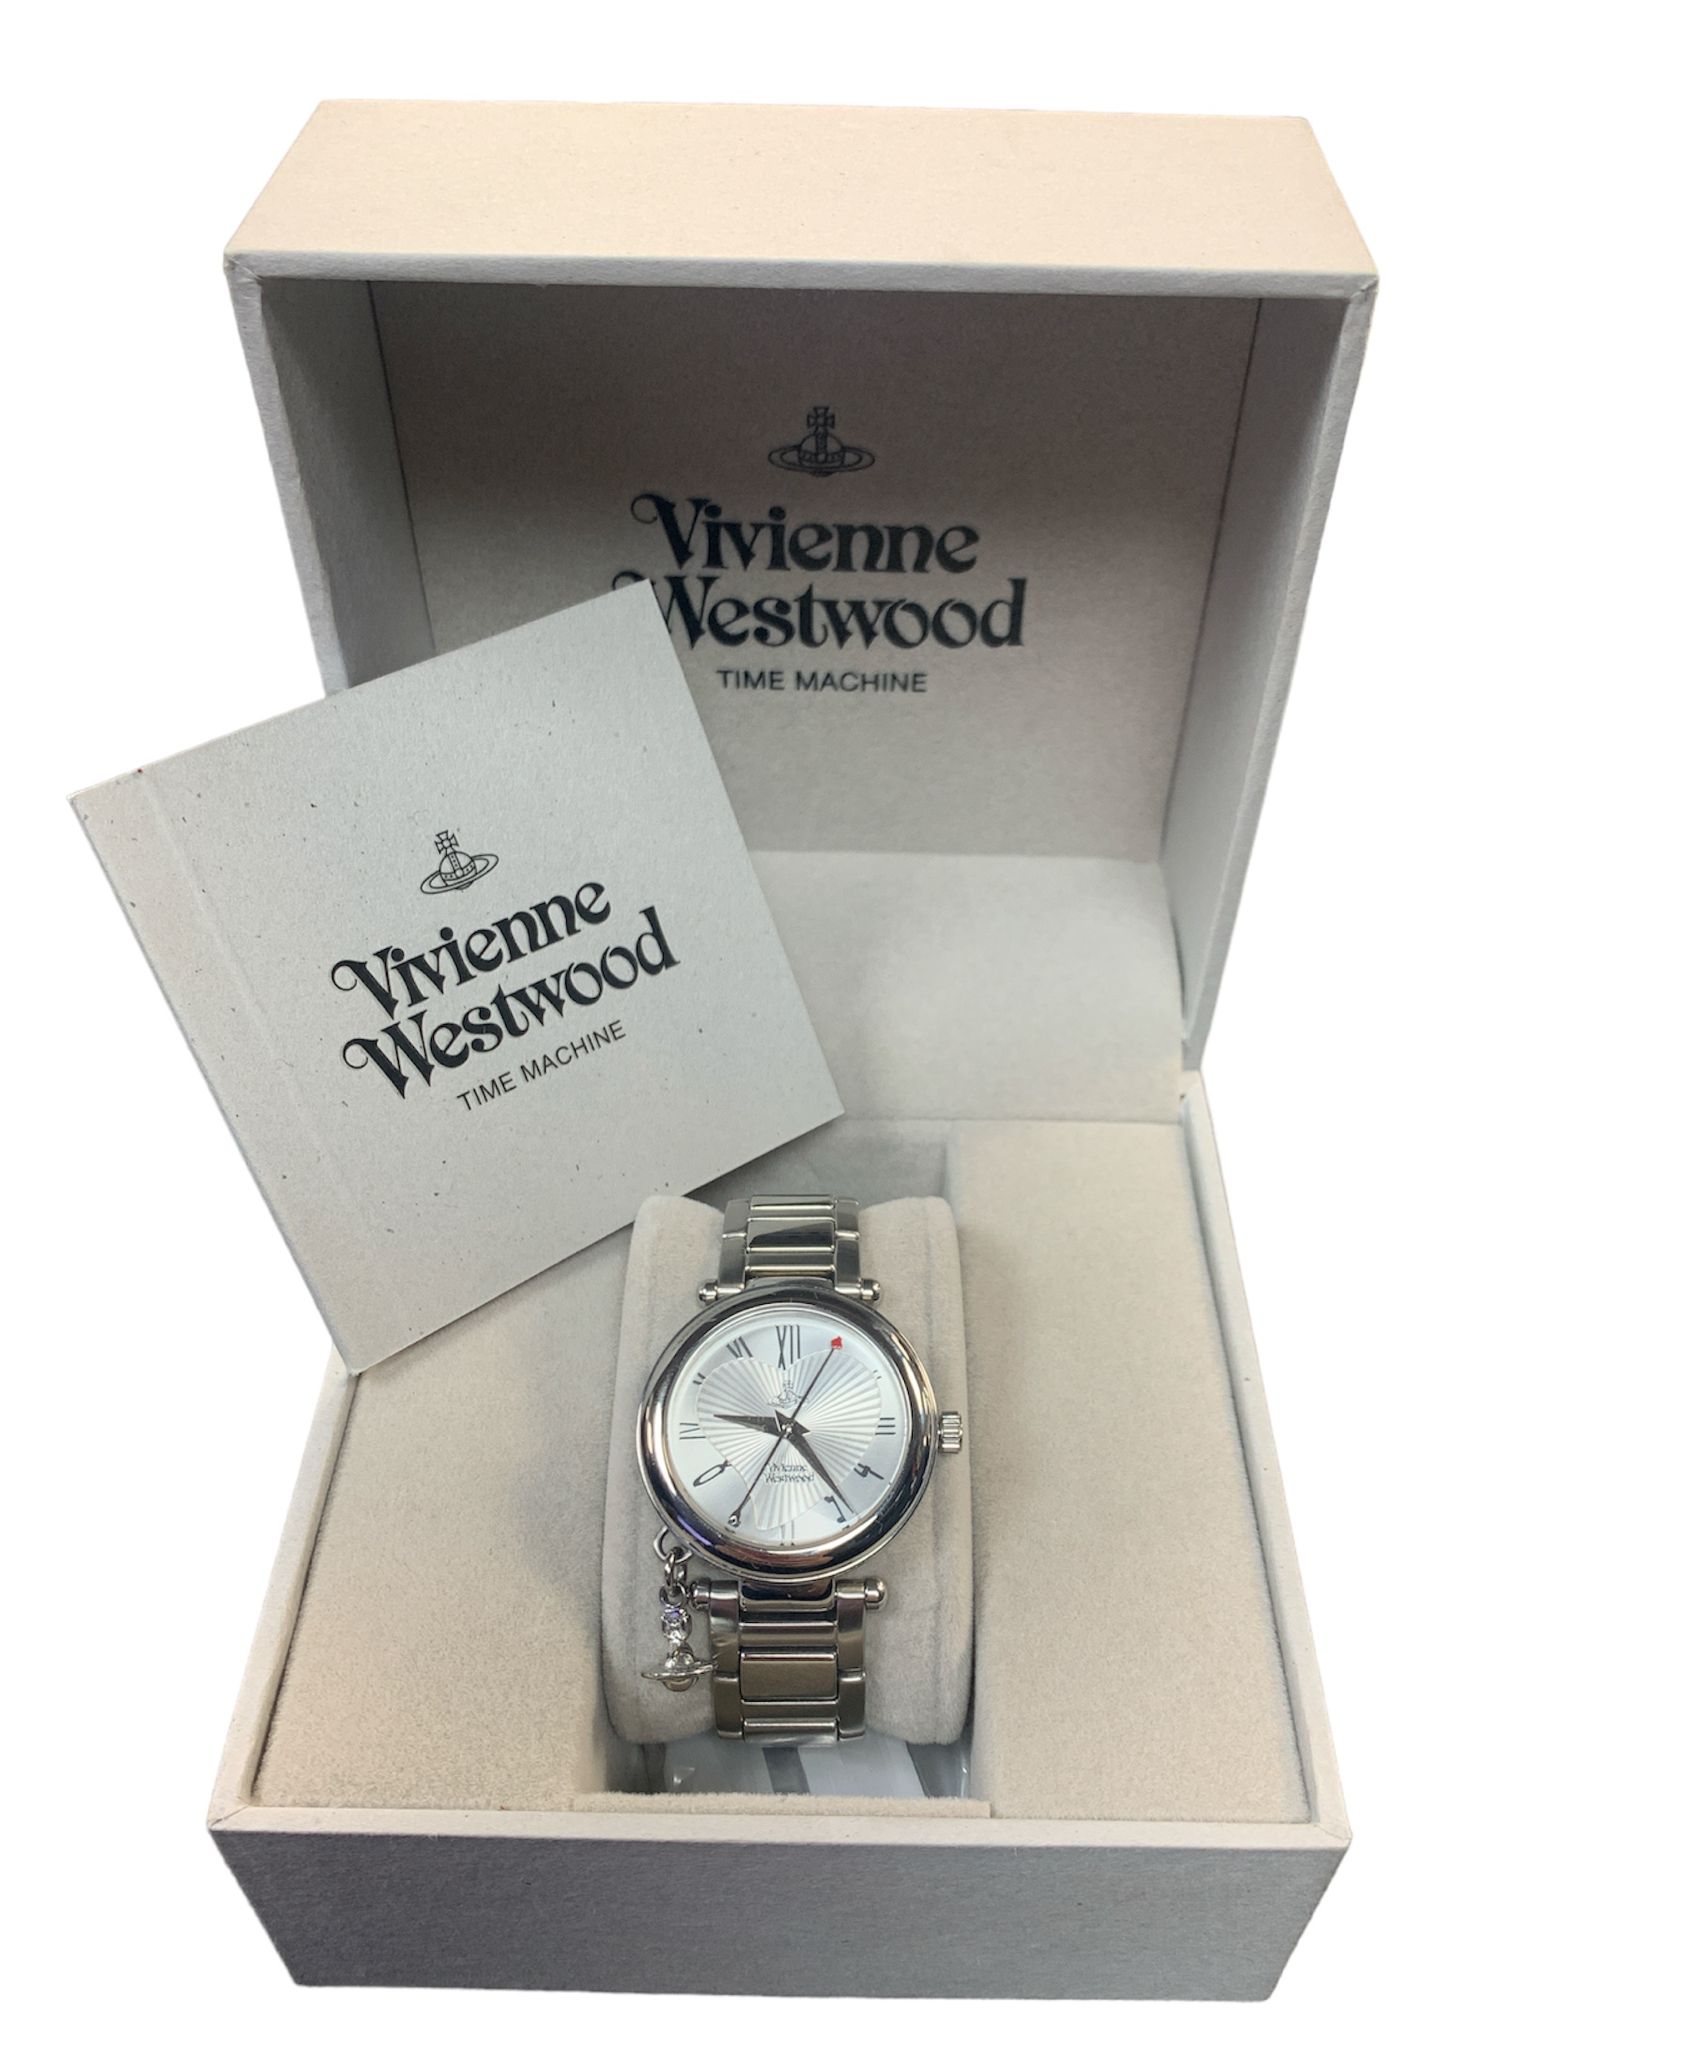 Vivienne Westwood TIME MACHINE 腕時計画像参照